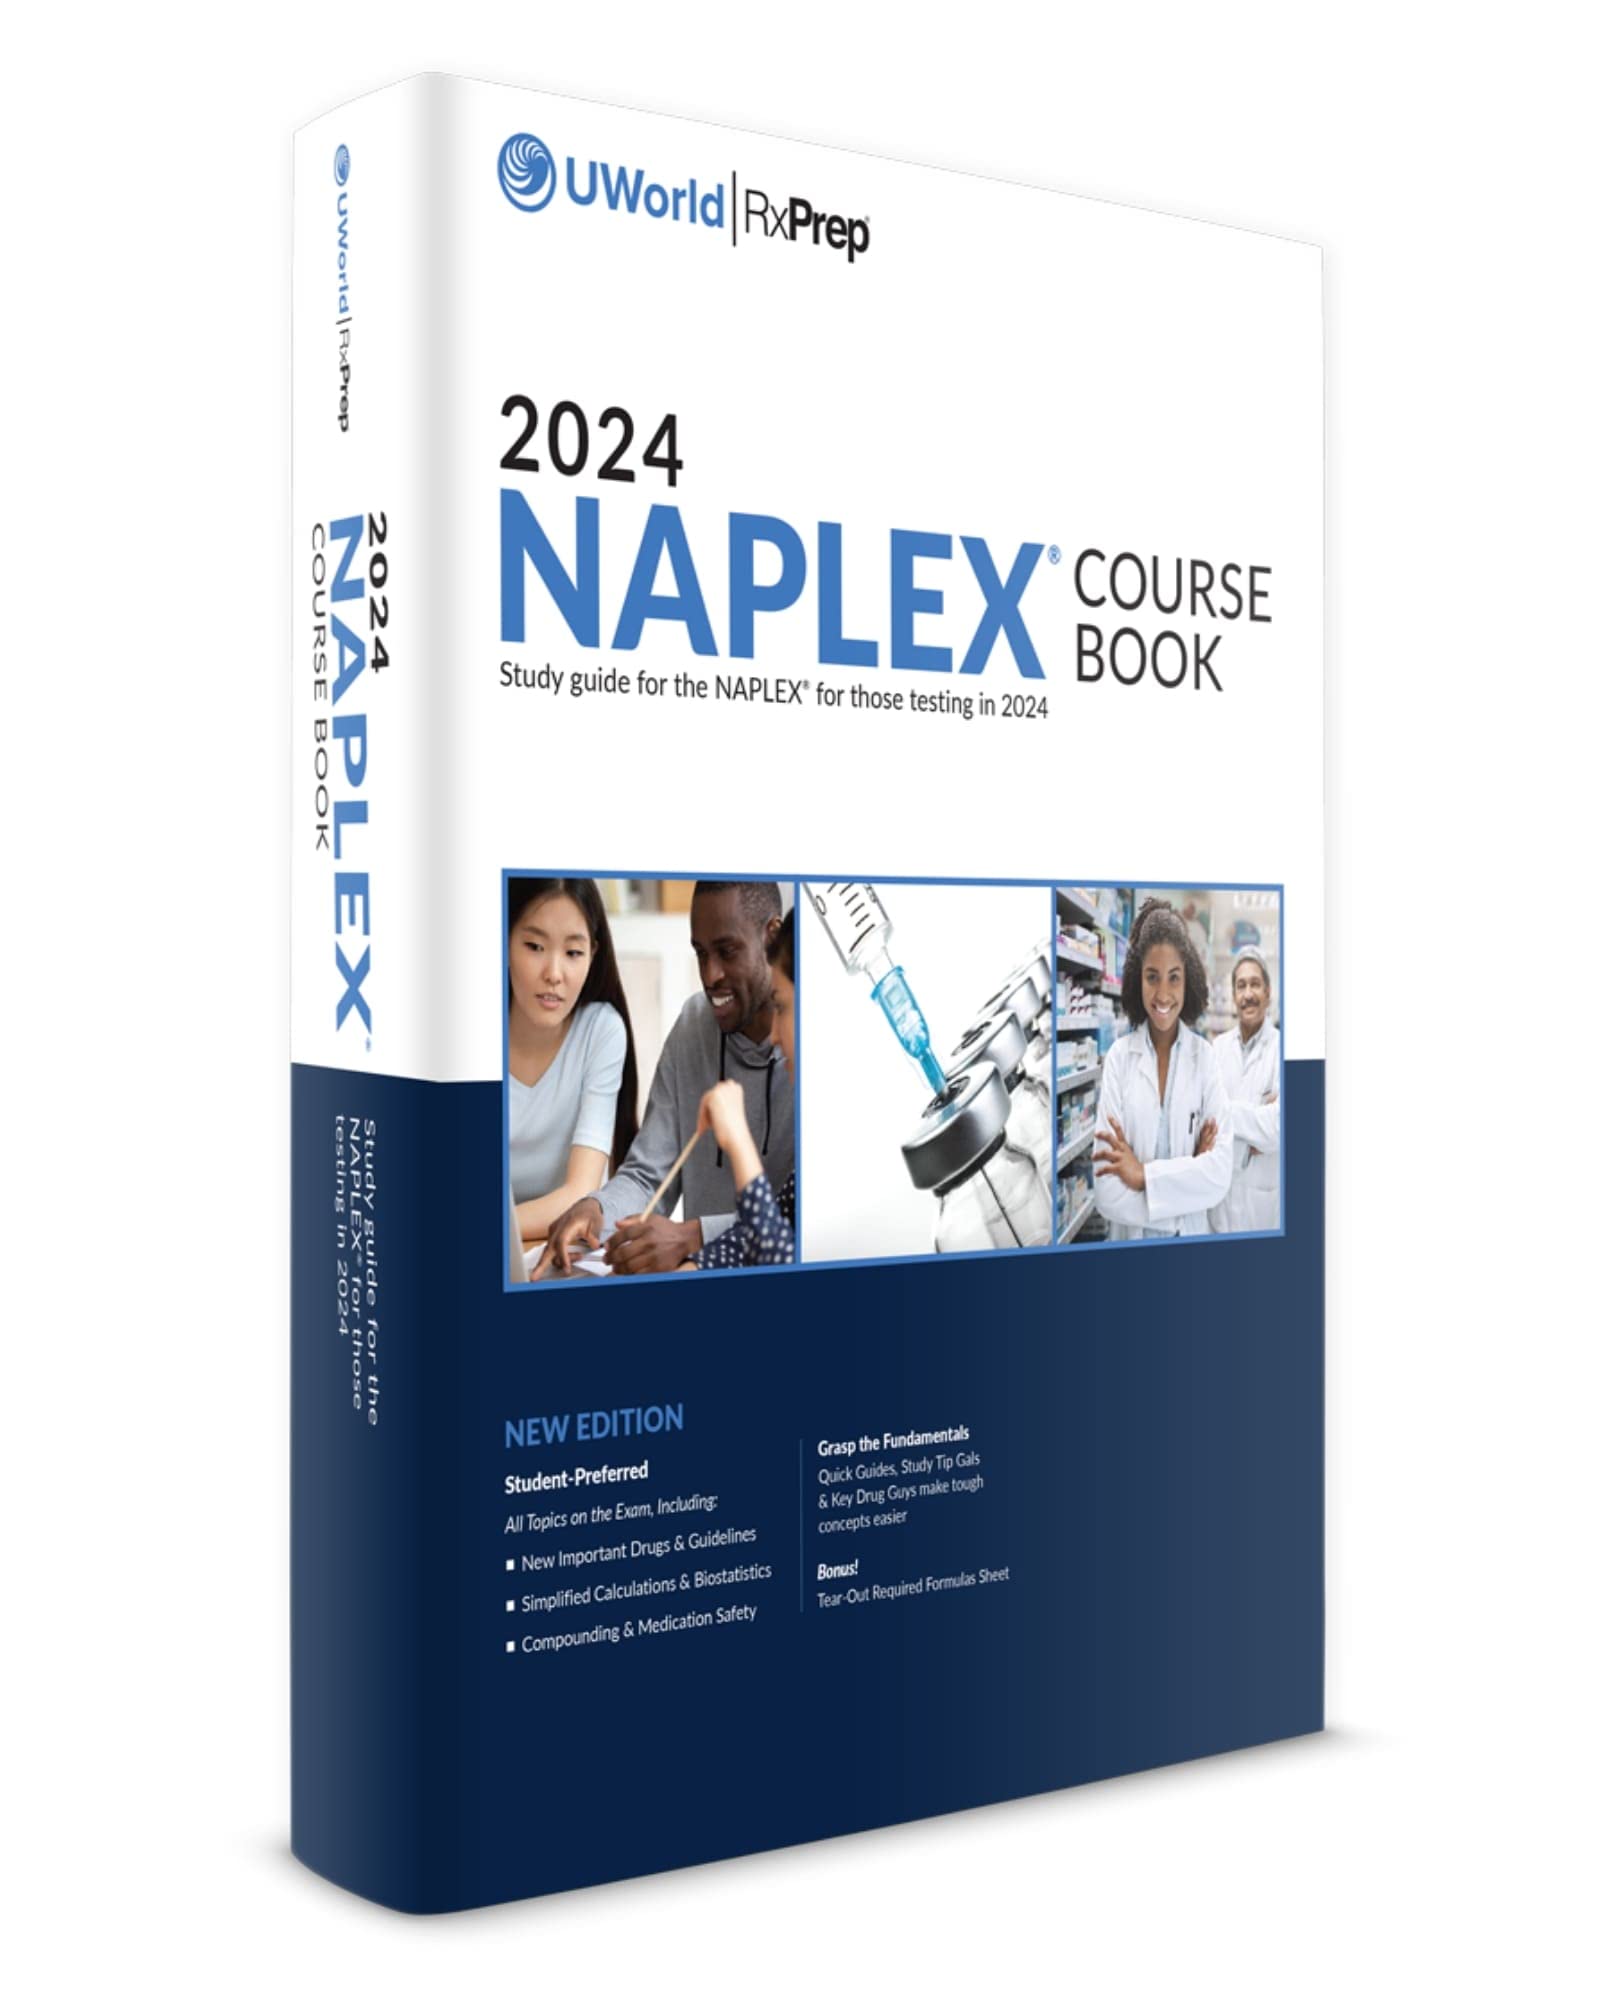 Mua UWorld RxPrep's 2024 NAPLEX Course Book for Pharmacist Licensure Exam Preparation trên